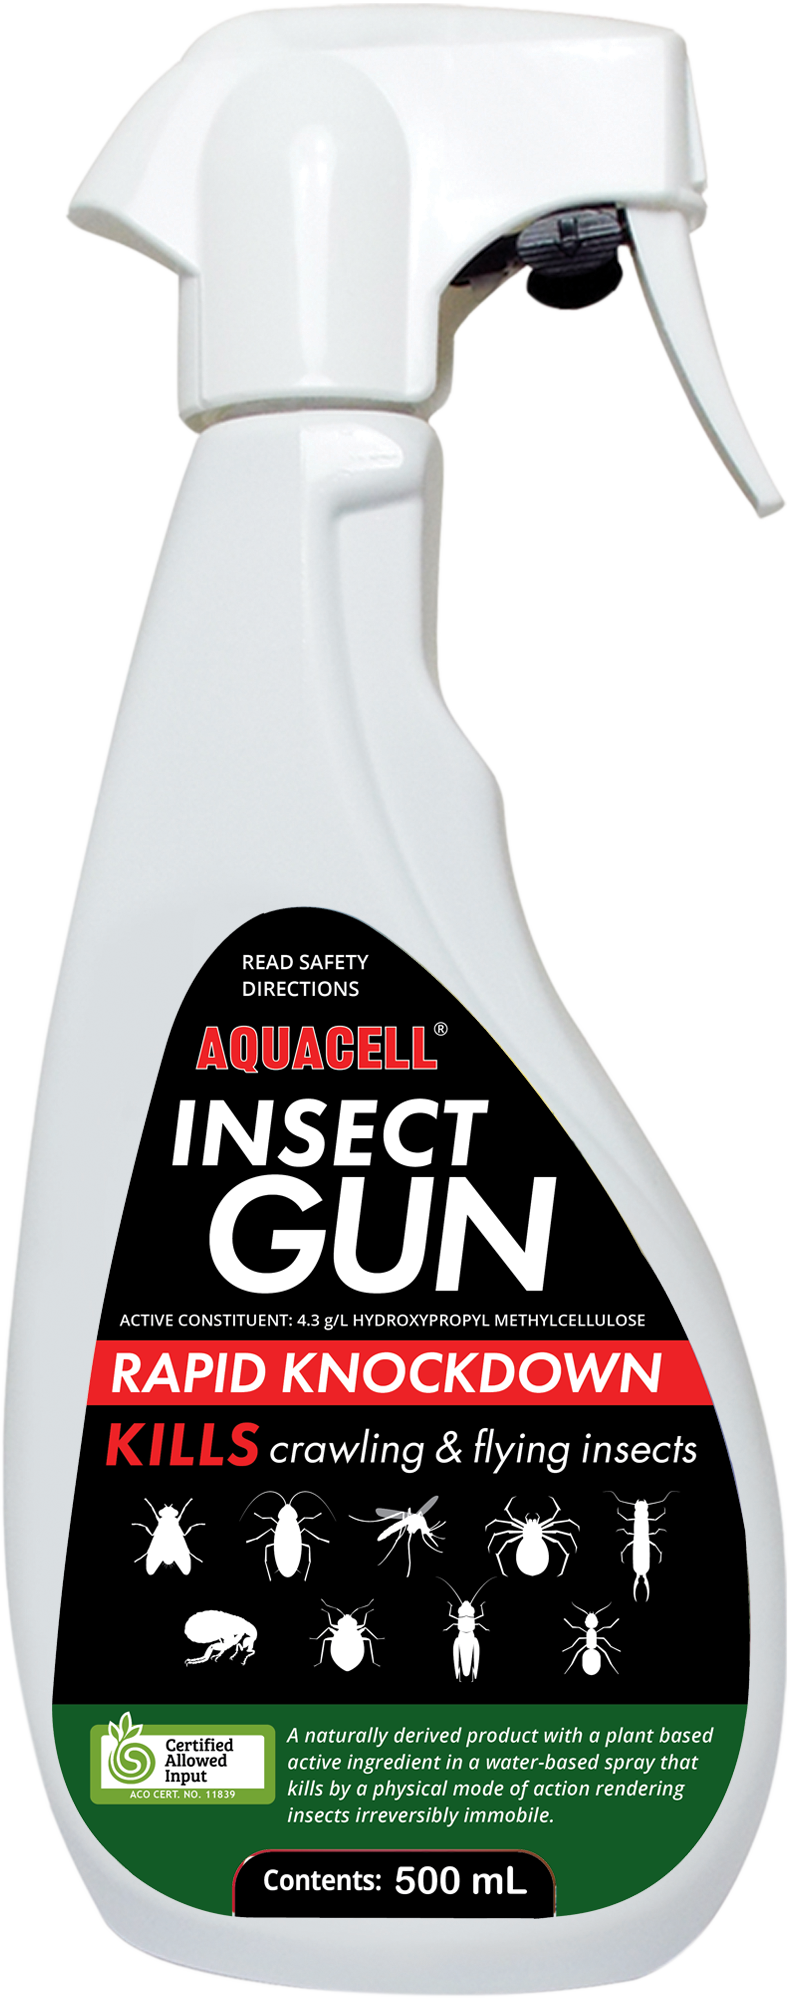 AQUACELL Insect Gun